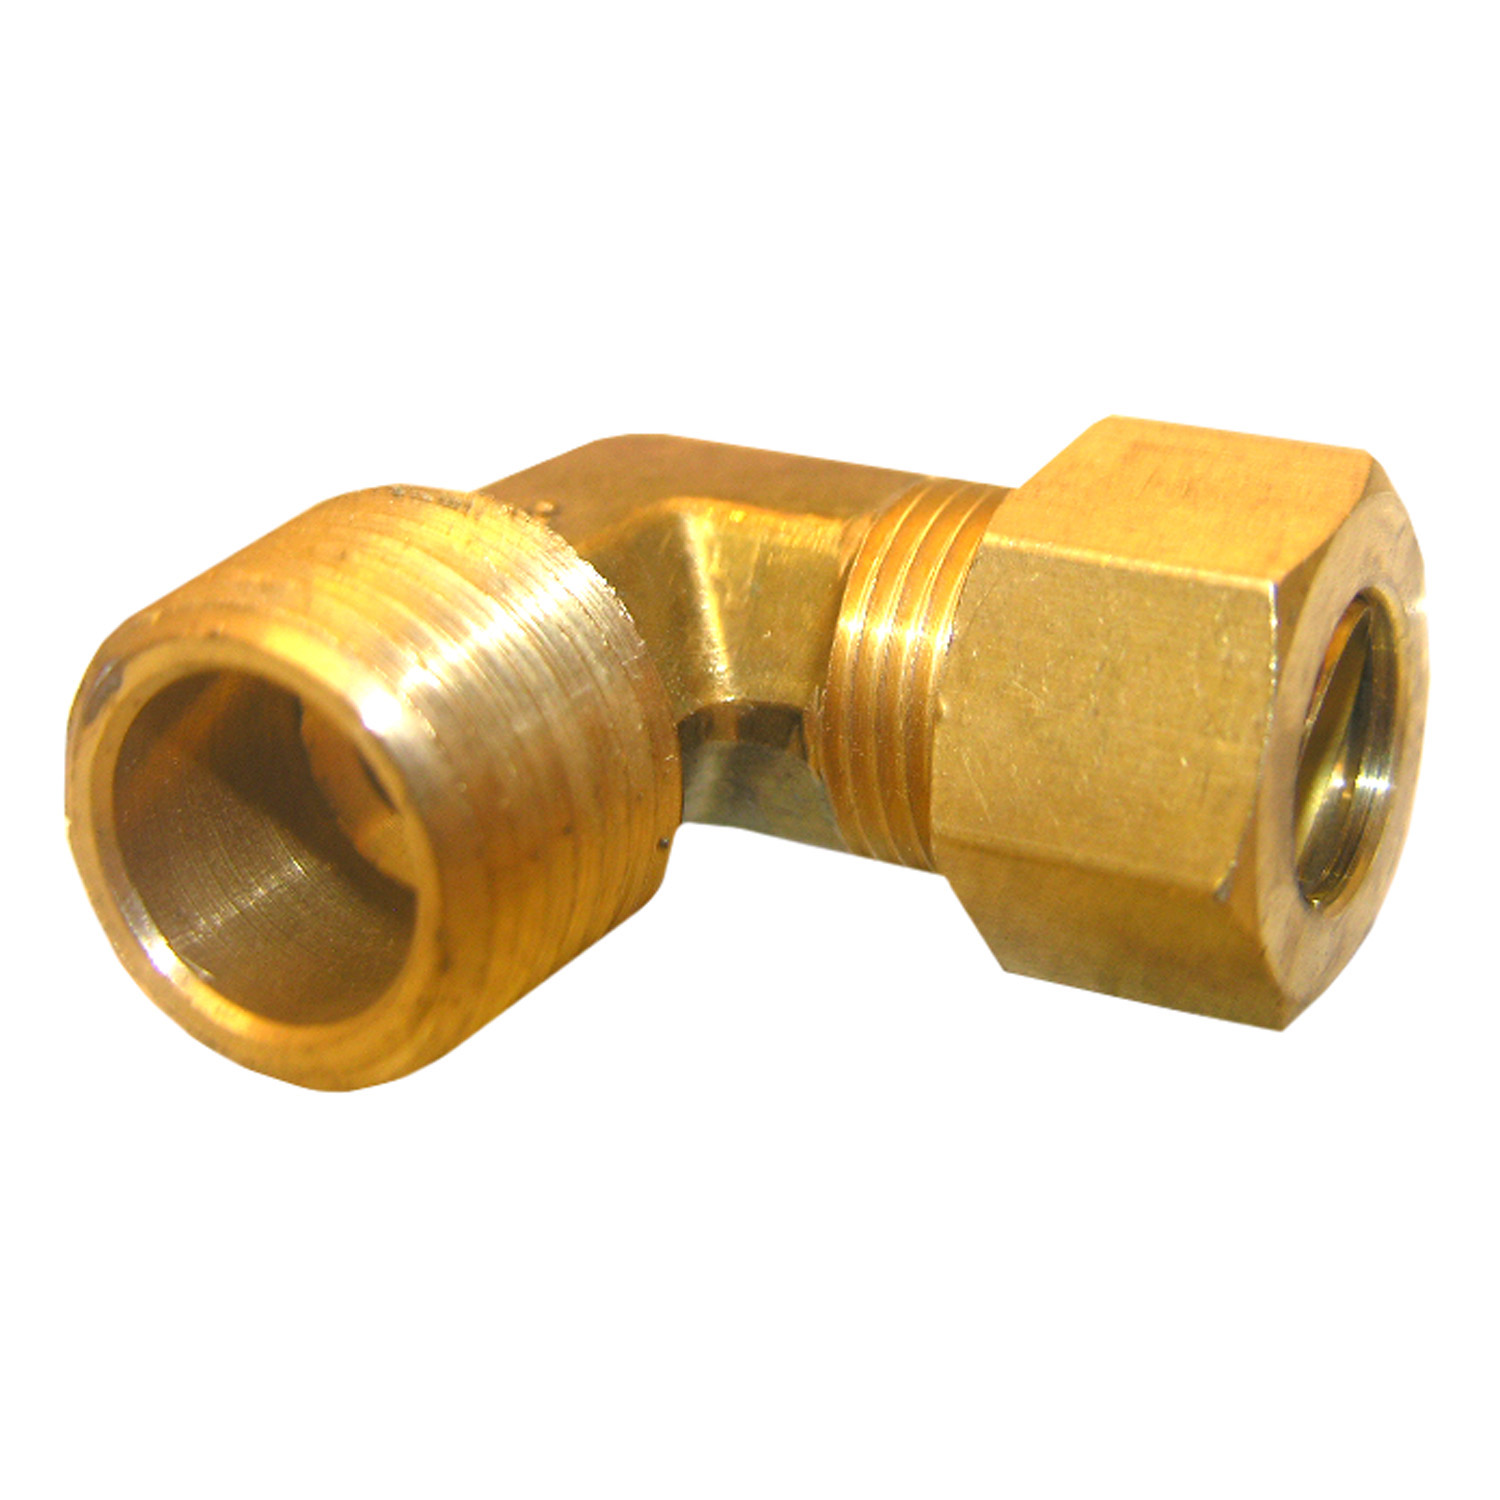 17-6949 Pipe Elbow, 1/2 in, Compression x MIP, 90 deg Angle, Brass, 200 psi Pressure